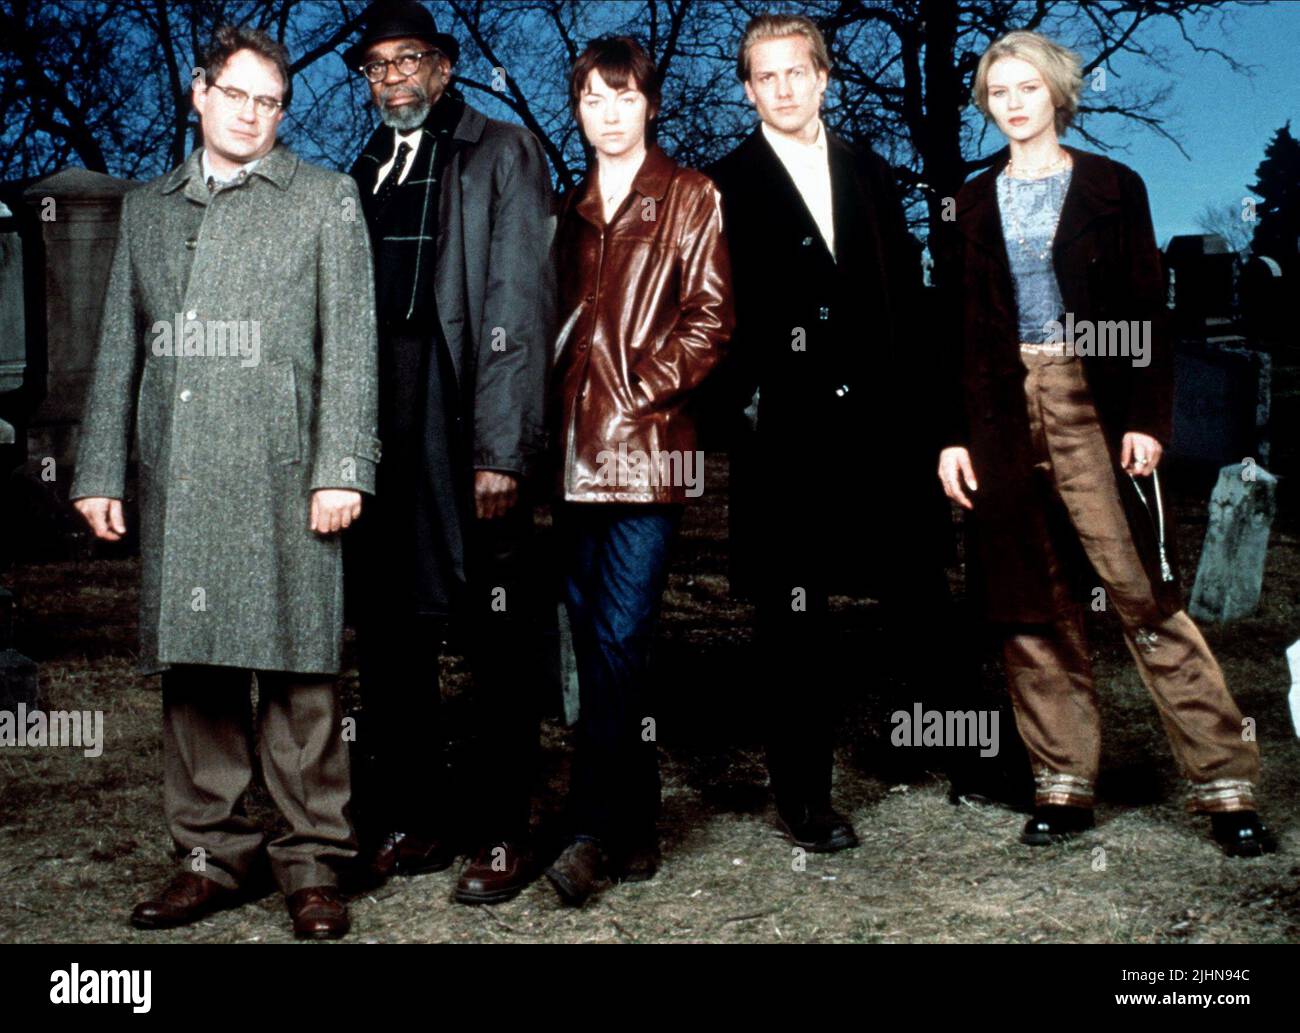 JOHN BILLINGSLEY, BILL COBBS, JULIANNE NICHOLSON, GABRIEL MACHT, MISSY CRIDER, THE OTHERS, 2000 Stock Photo